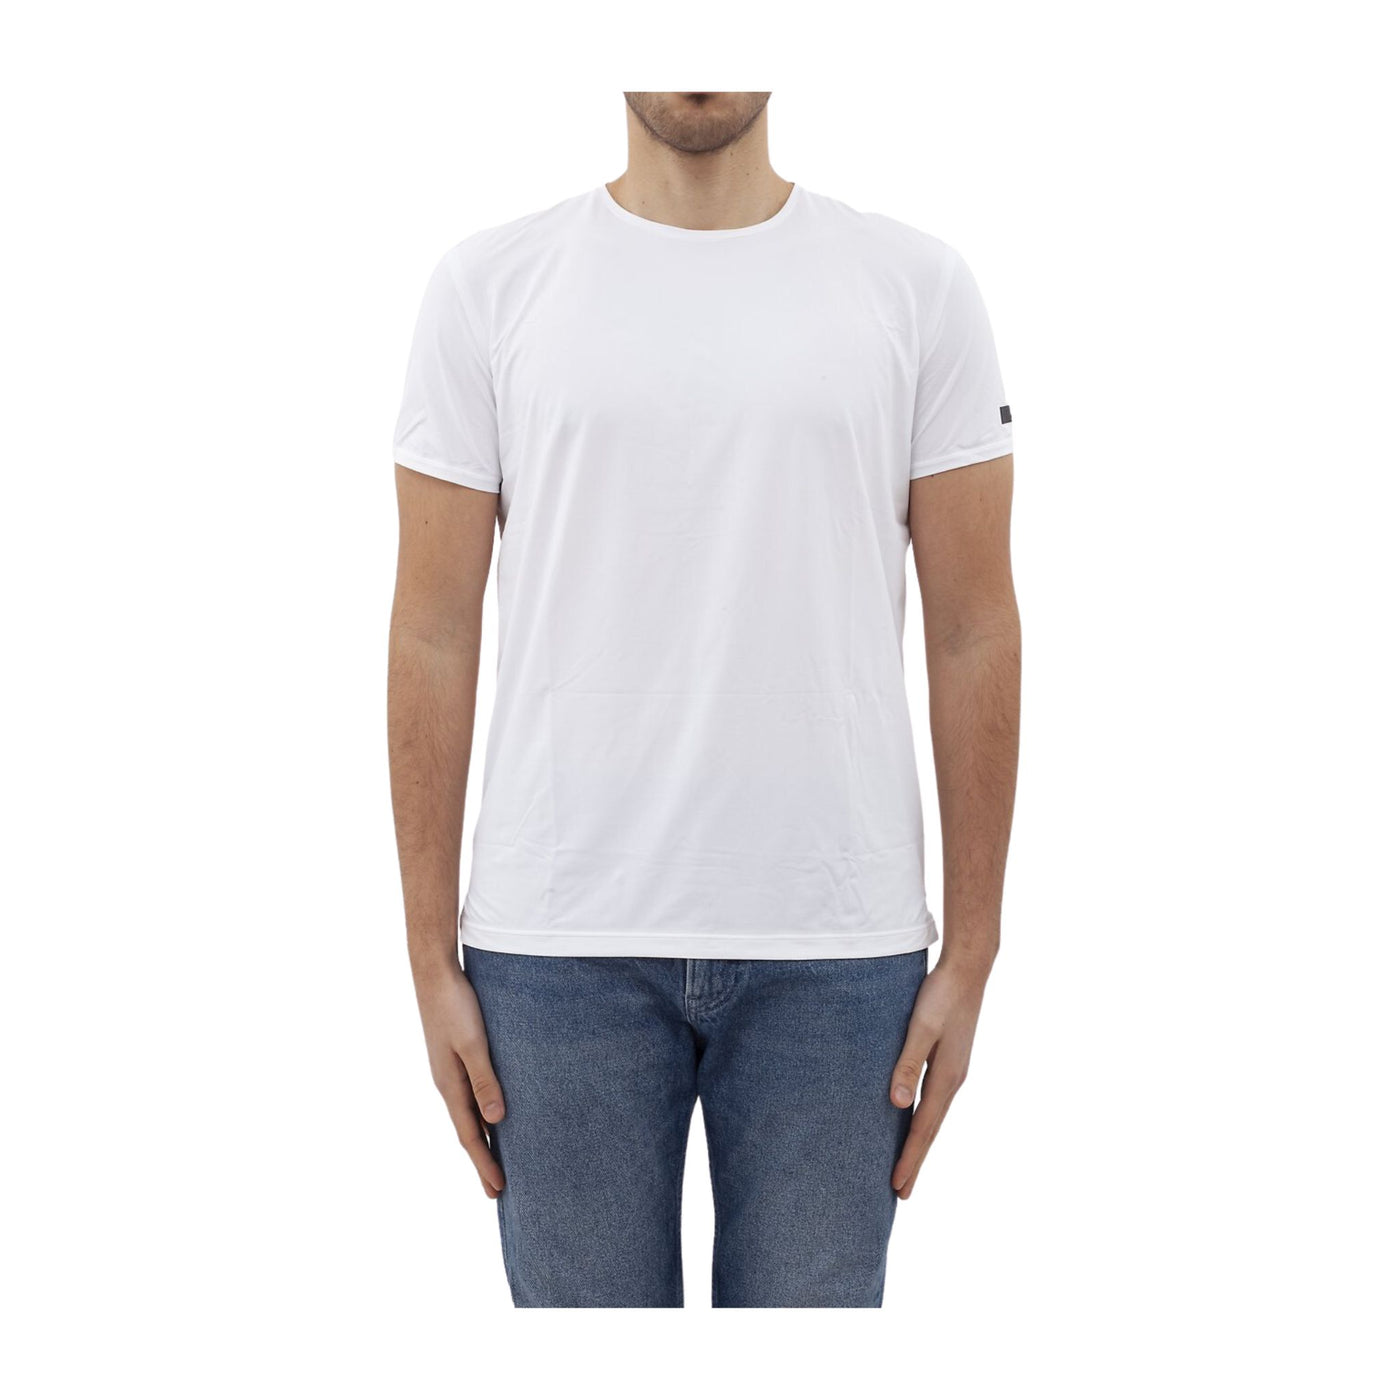 Men's short-sleeved round-neck T-shirt